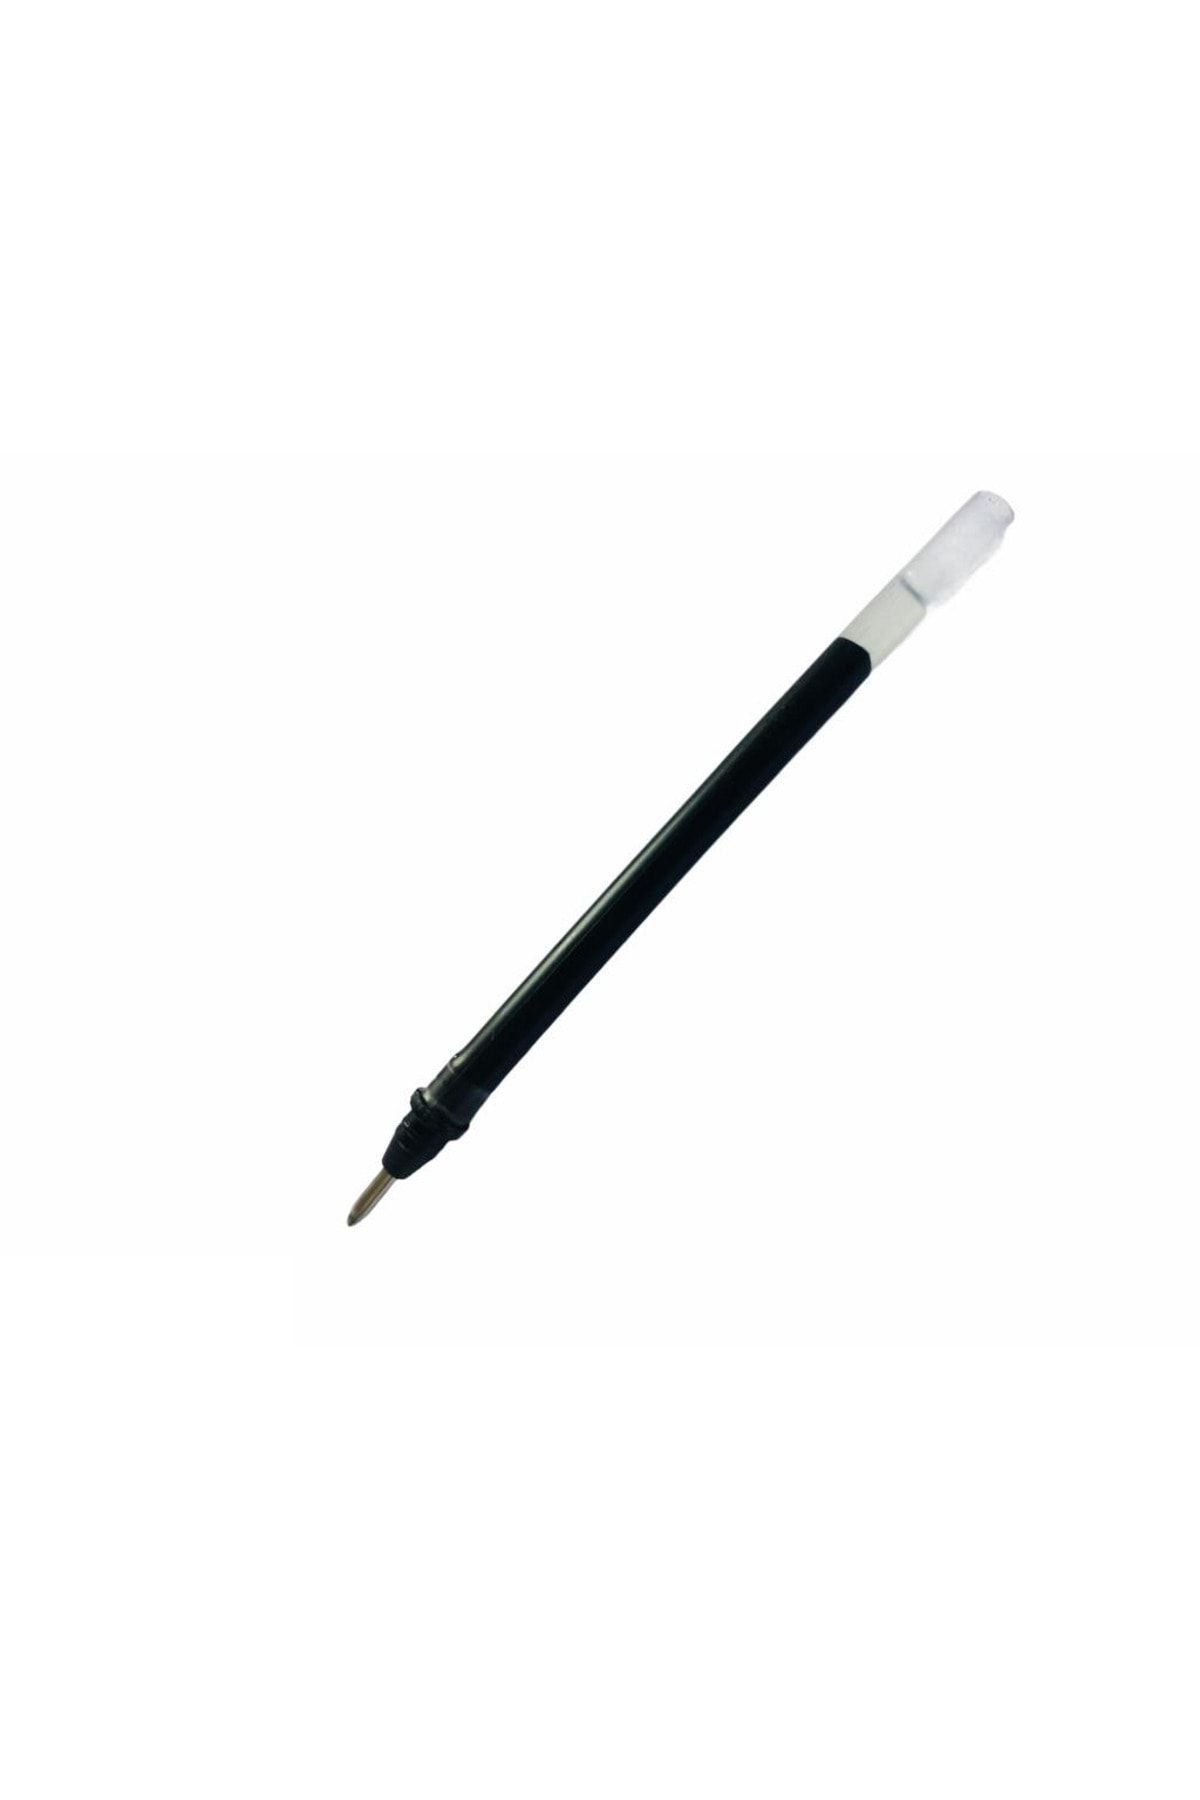 Pensan Roller Kalem Yedeği My Sign Jel Bilye Uçlu İmza Kalem 1.0 Mm Siyah Refil (25 Li Paket)